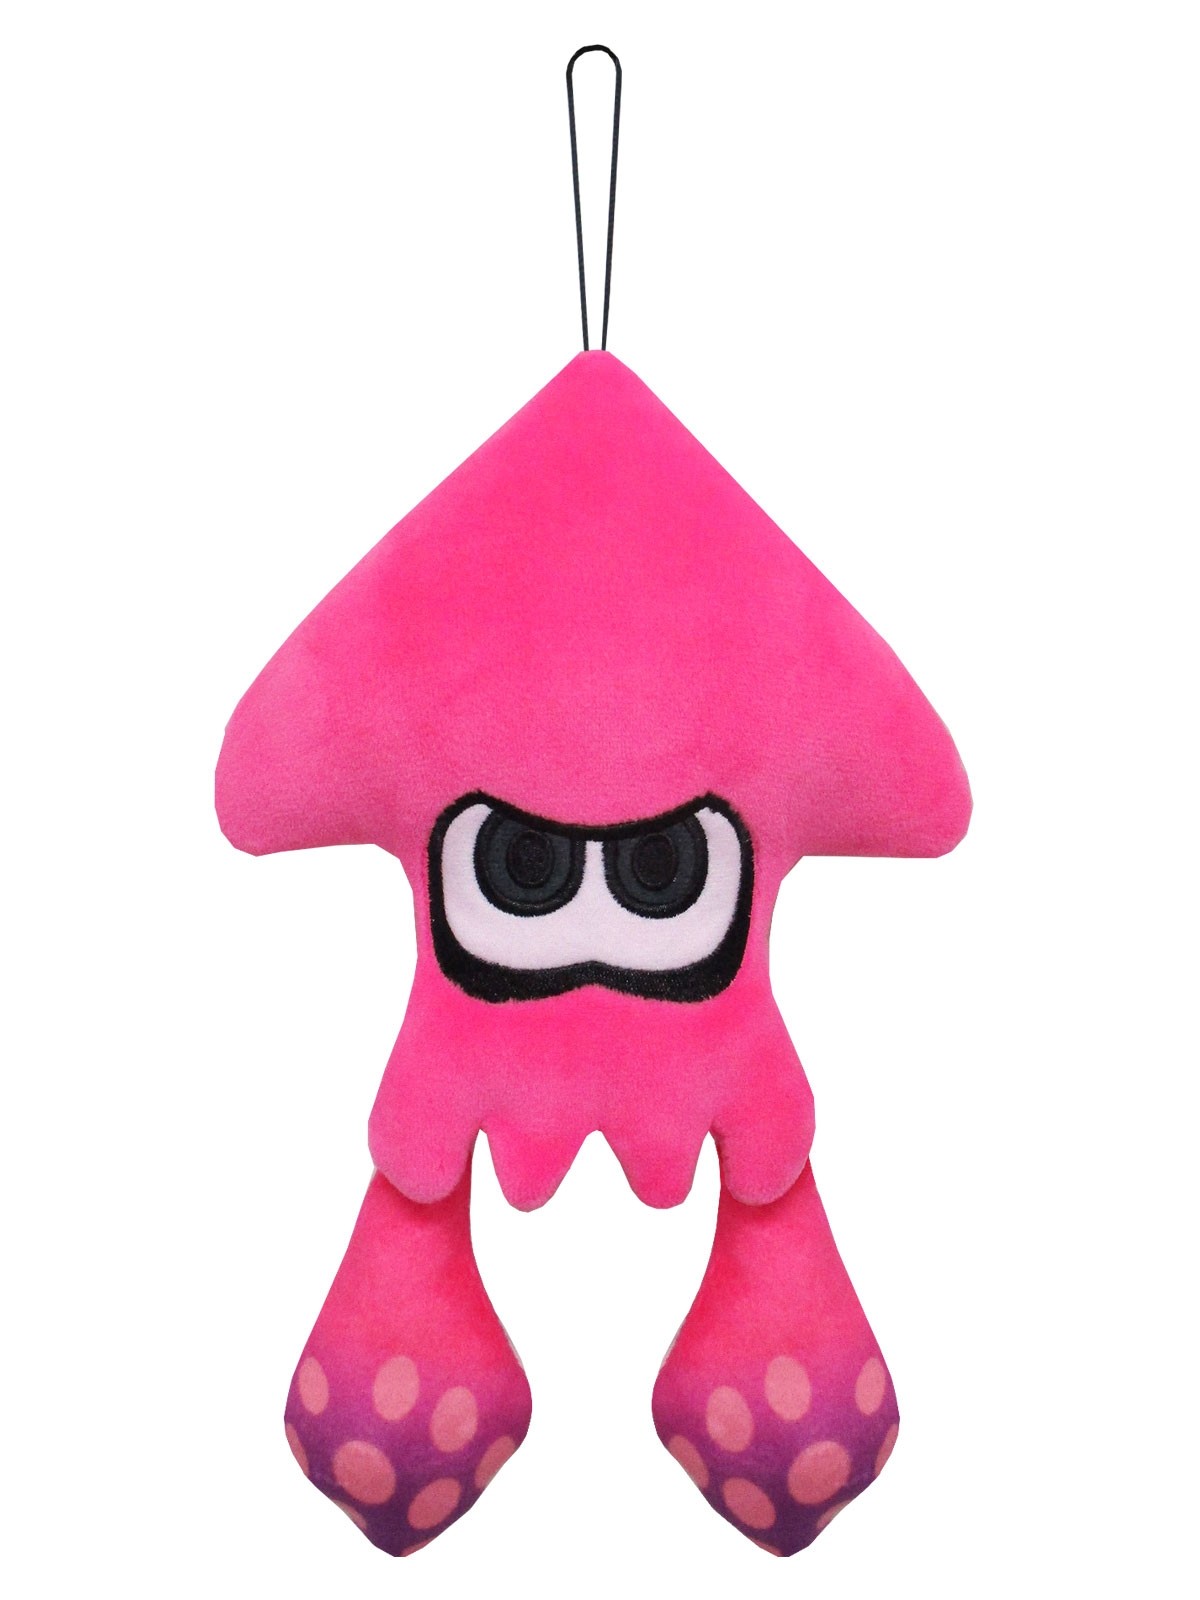 Inkling squid Neon Pink 9 Inch Plush